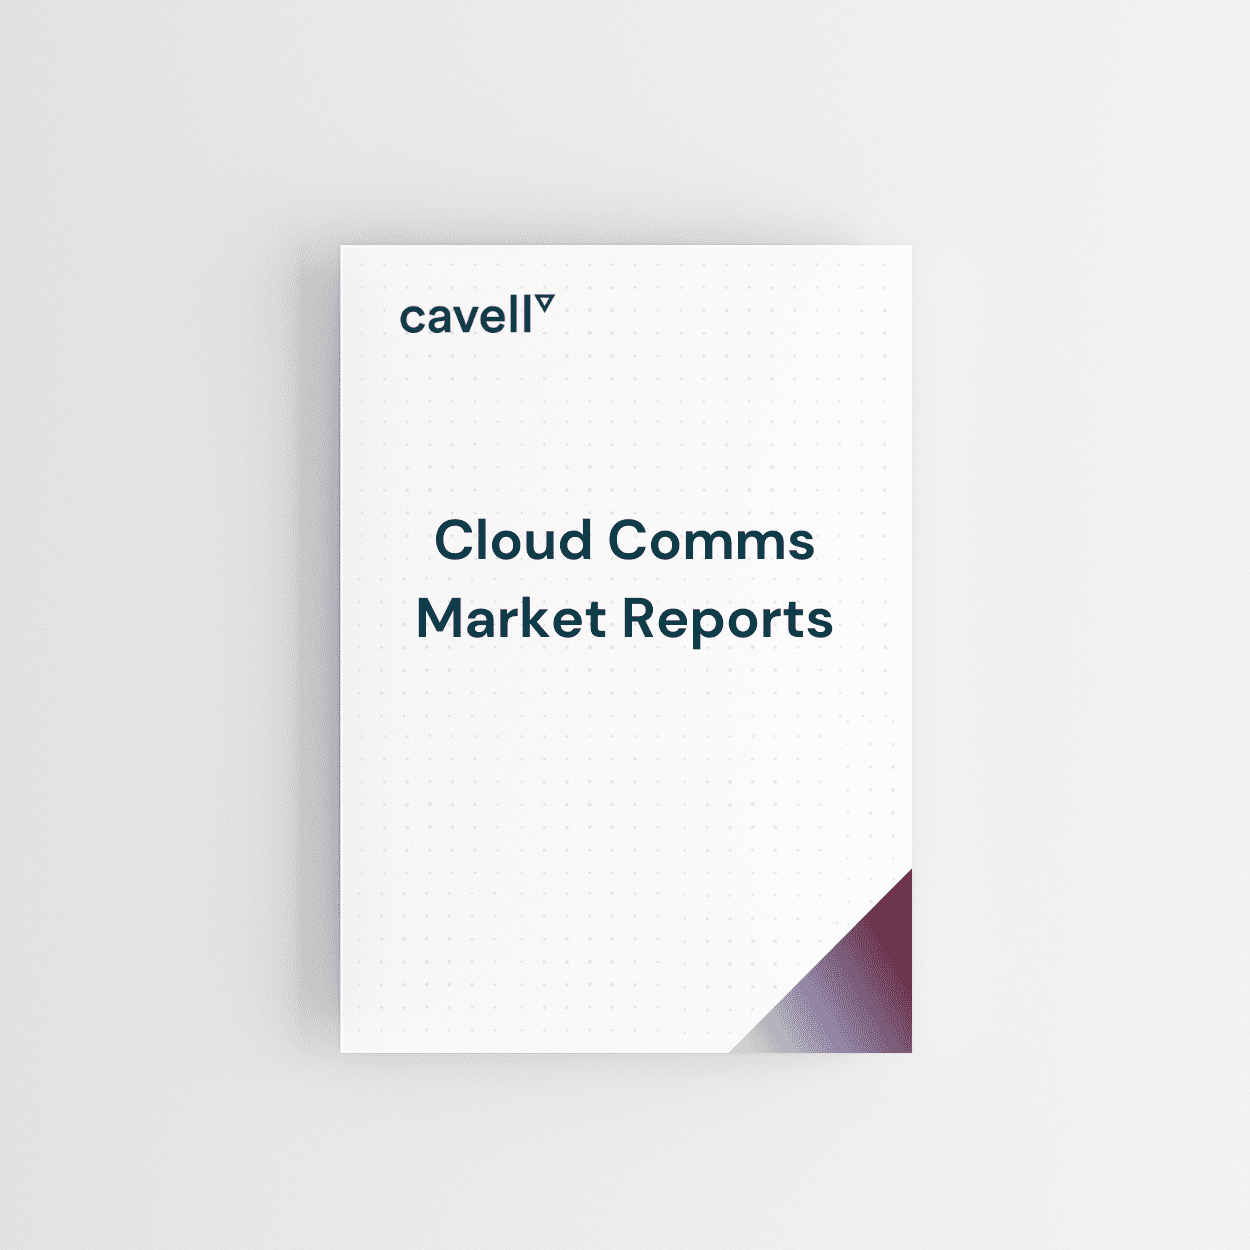 Cloud Comms Market Reports